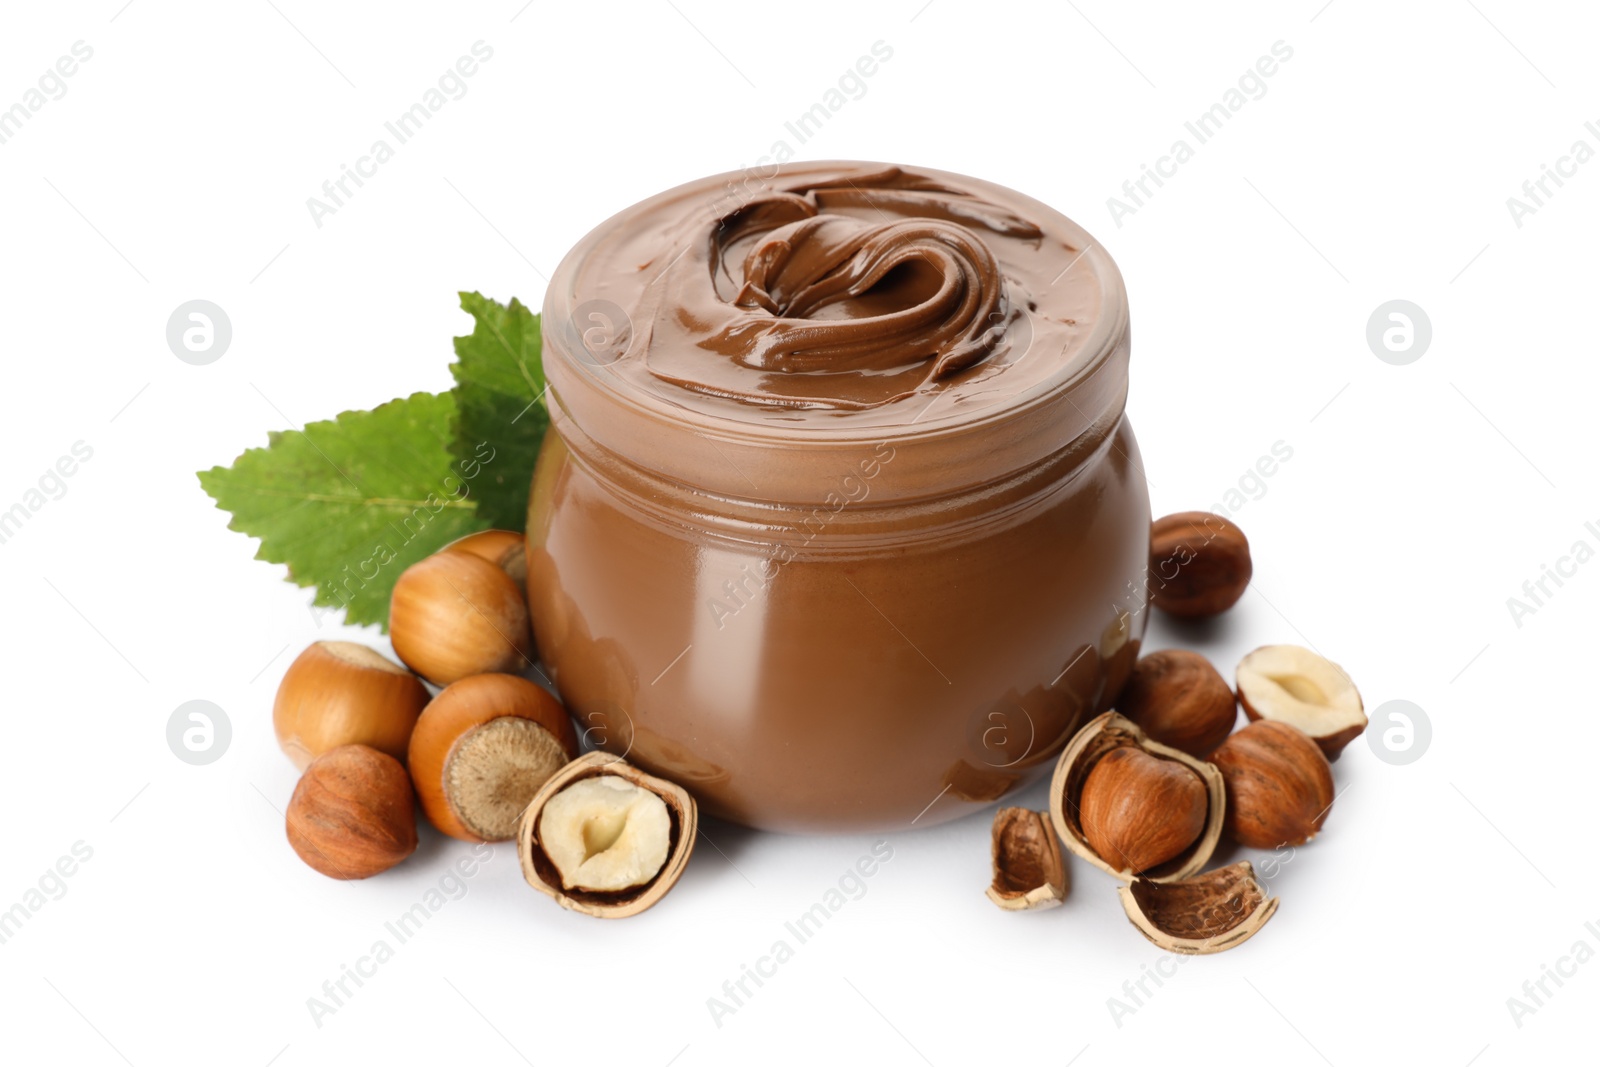 Photo of Glass jar with tasty chocolate hazelnut spread and nuts on white background